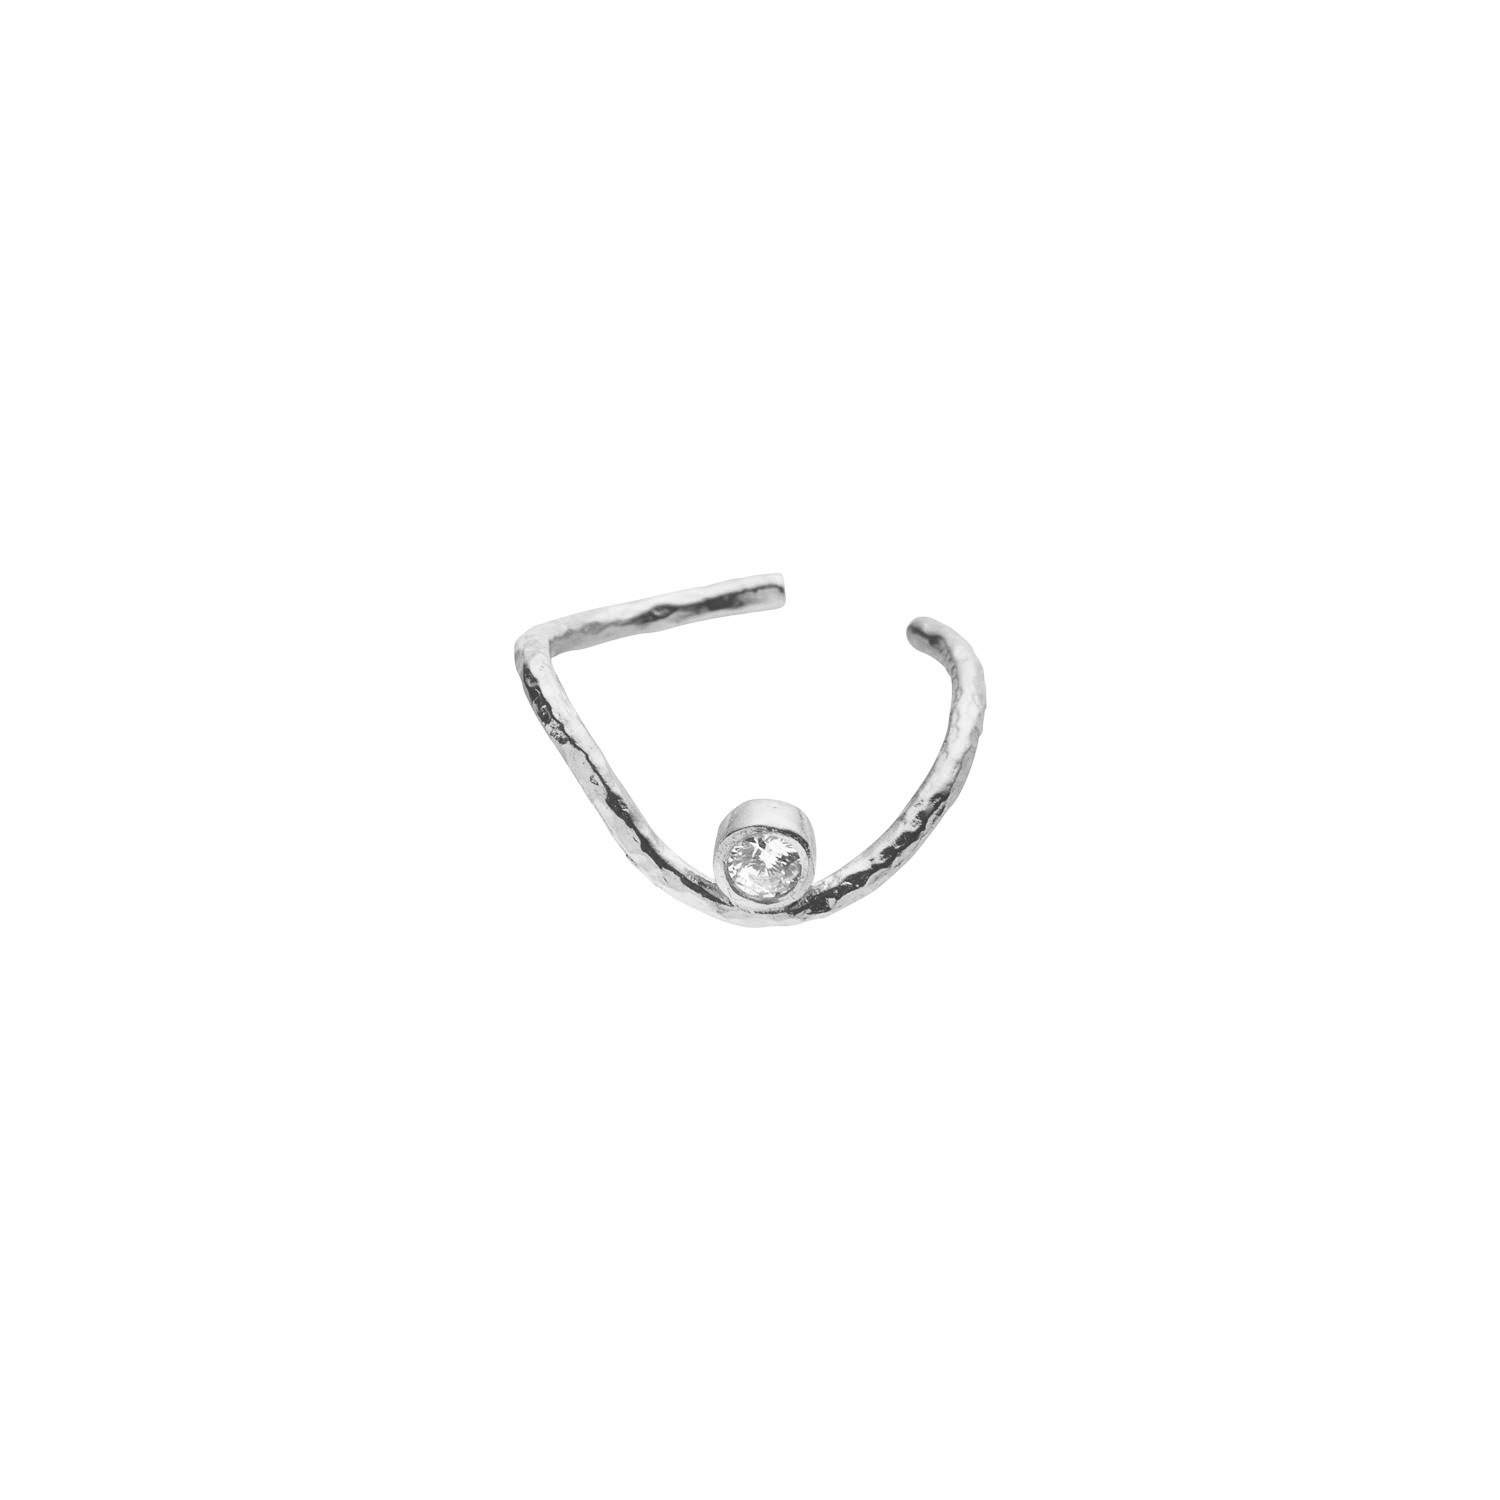 Sentimental Mount Bank radium Flot Wavy Ear Cuff With Stone i Sølv Sterling 925 fra STINE A Jewelry